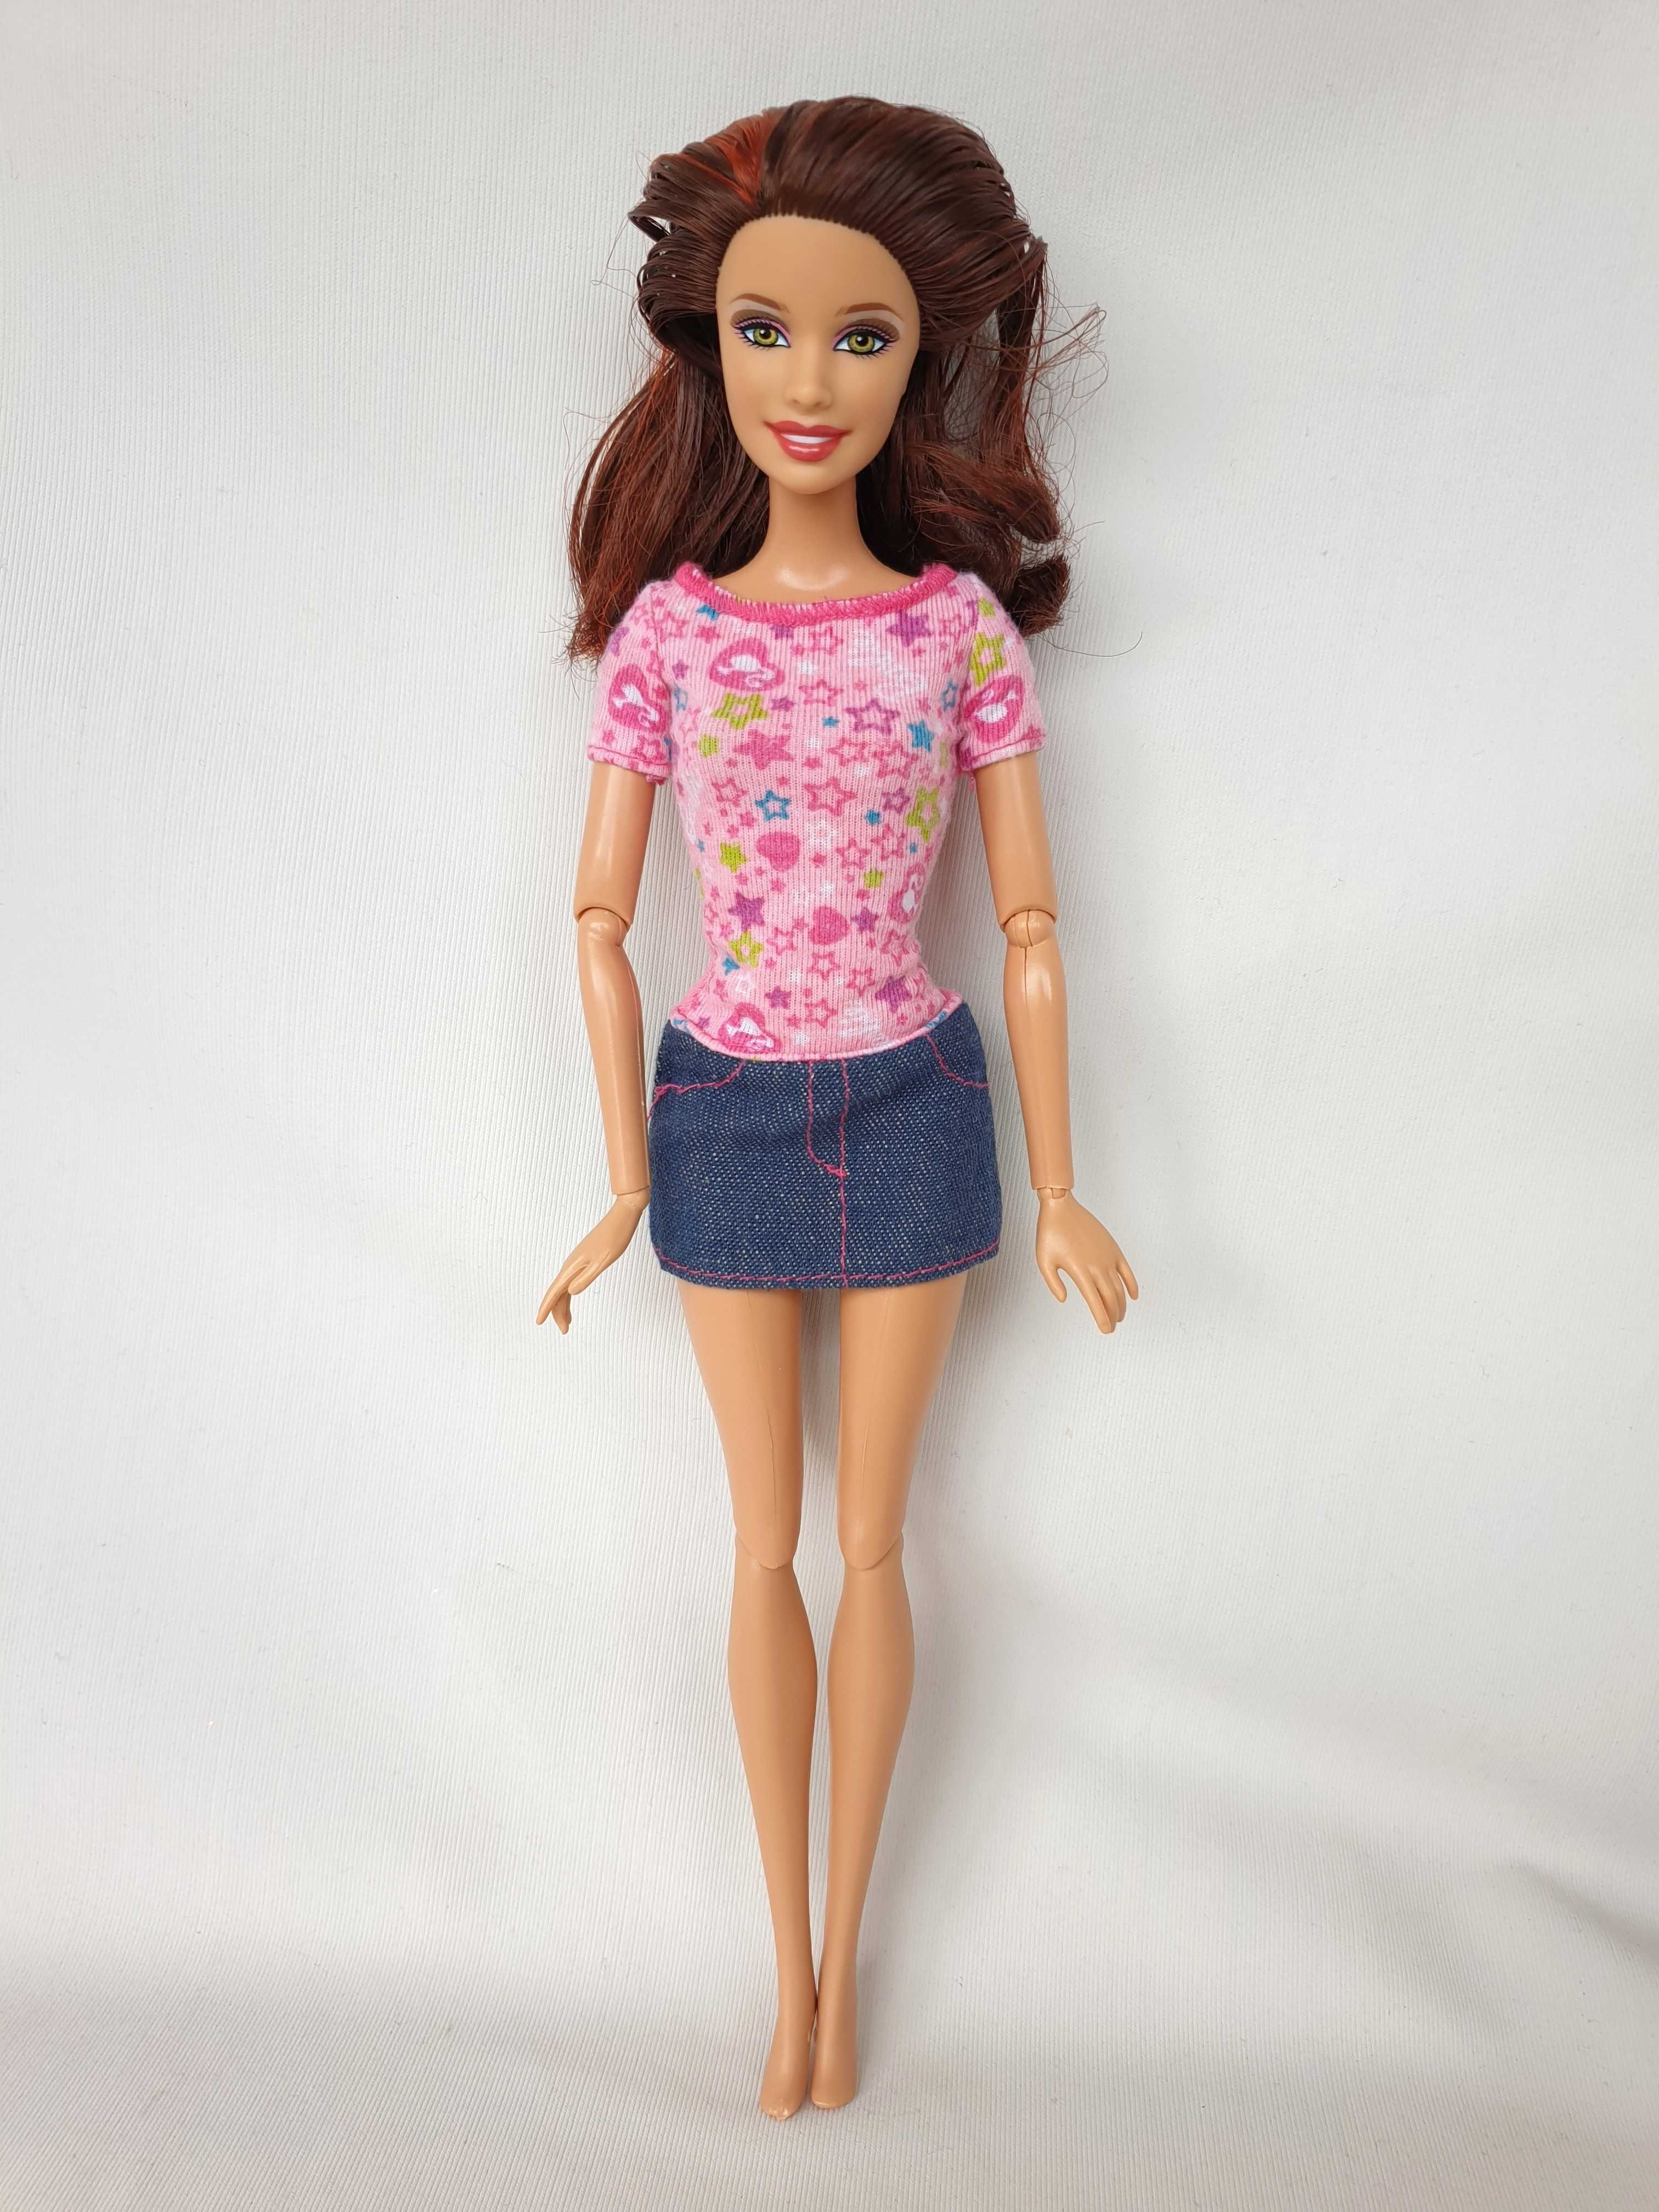 Кукла Барби Fashionistas Teresa 2012 Barbie